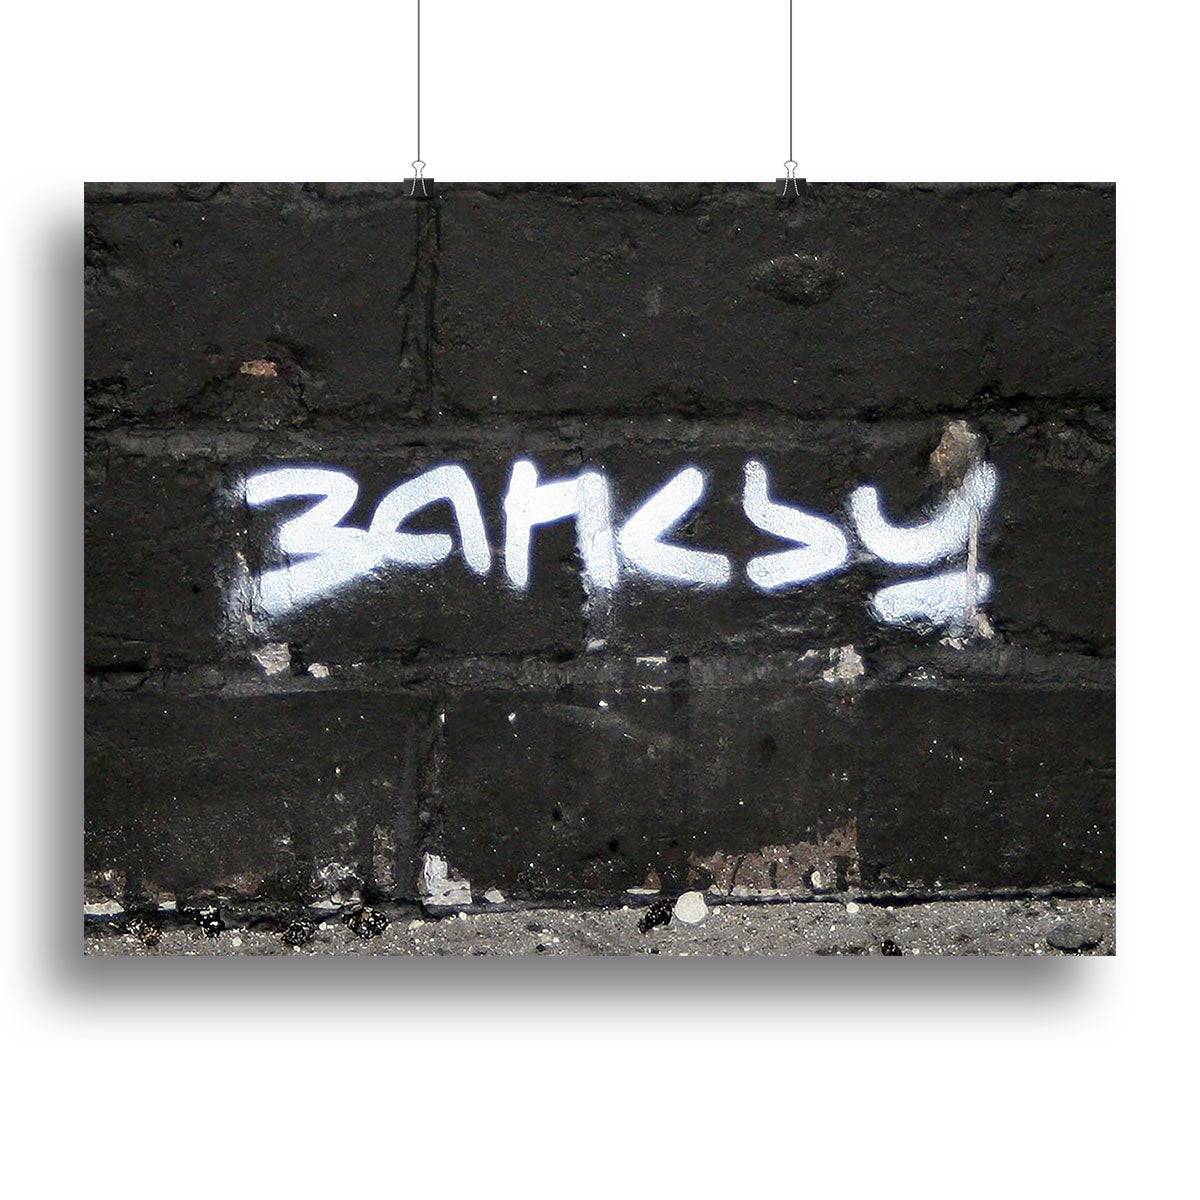 Banksy Signature Tag Canvas Print or Poster